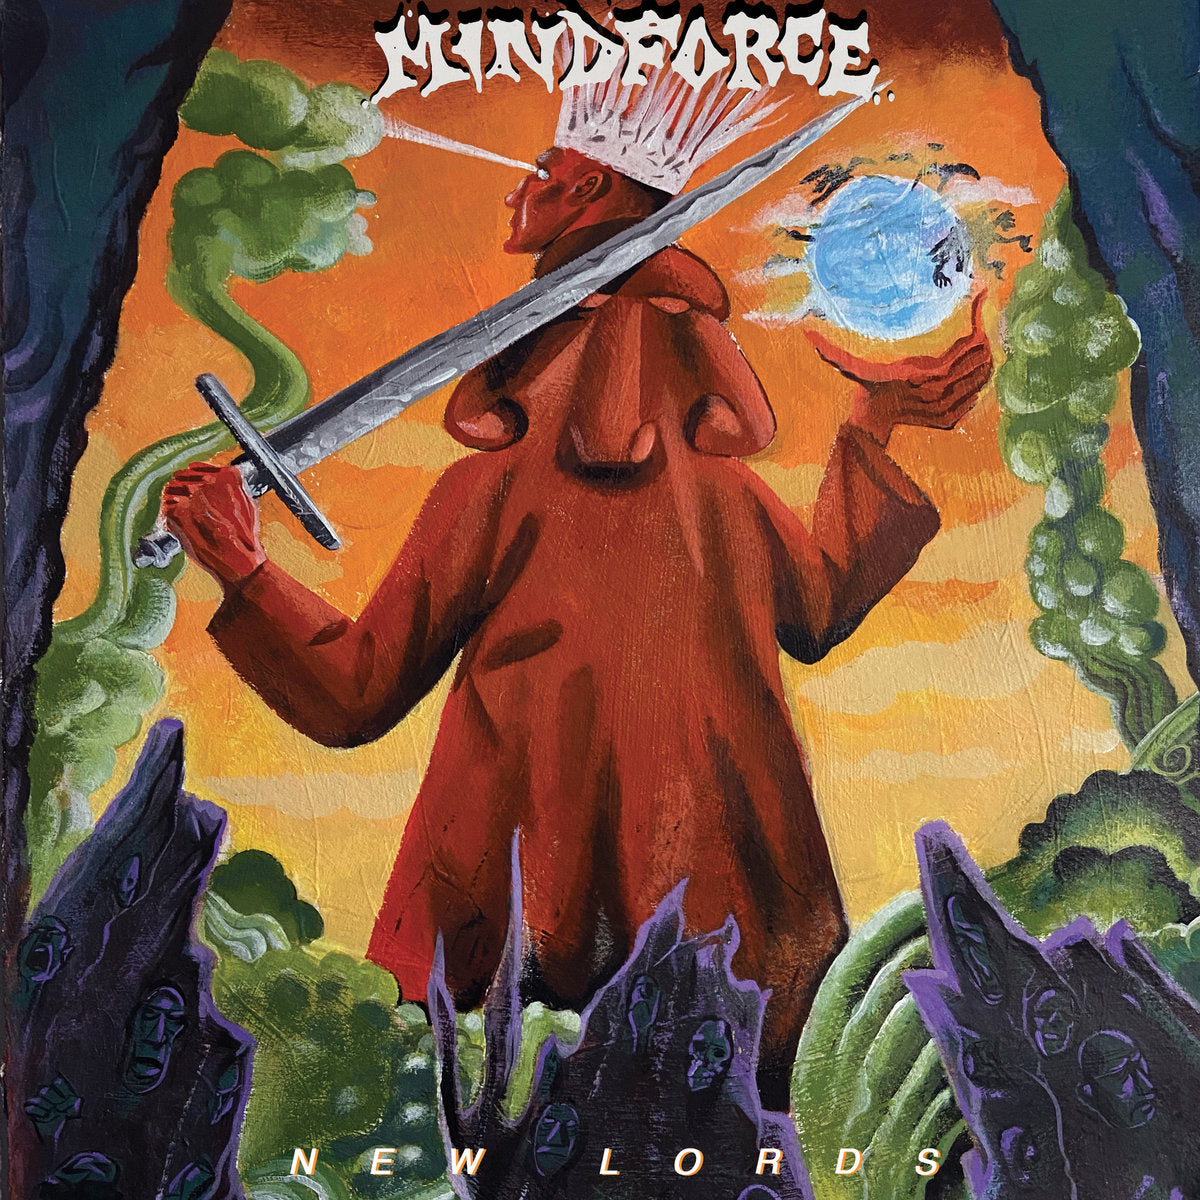 Mindforce "New Lords" 12" Vinyl